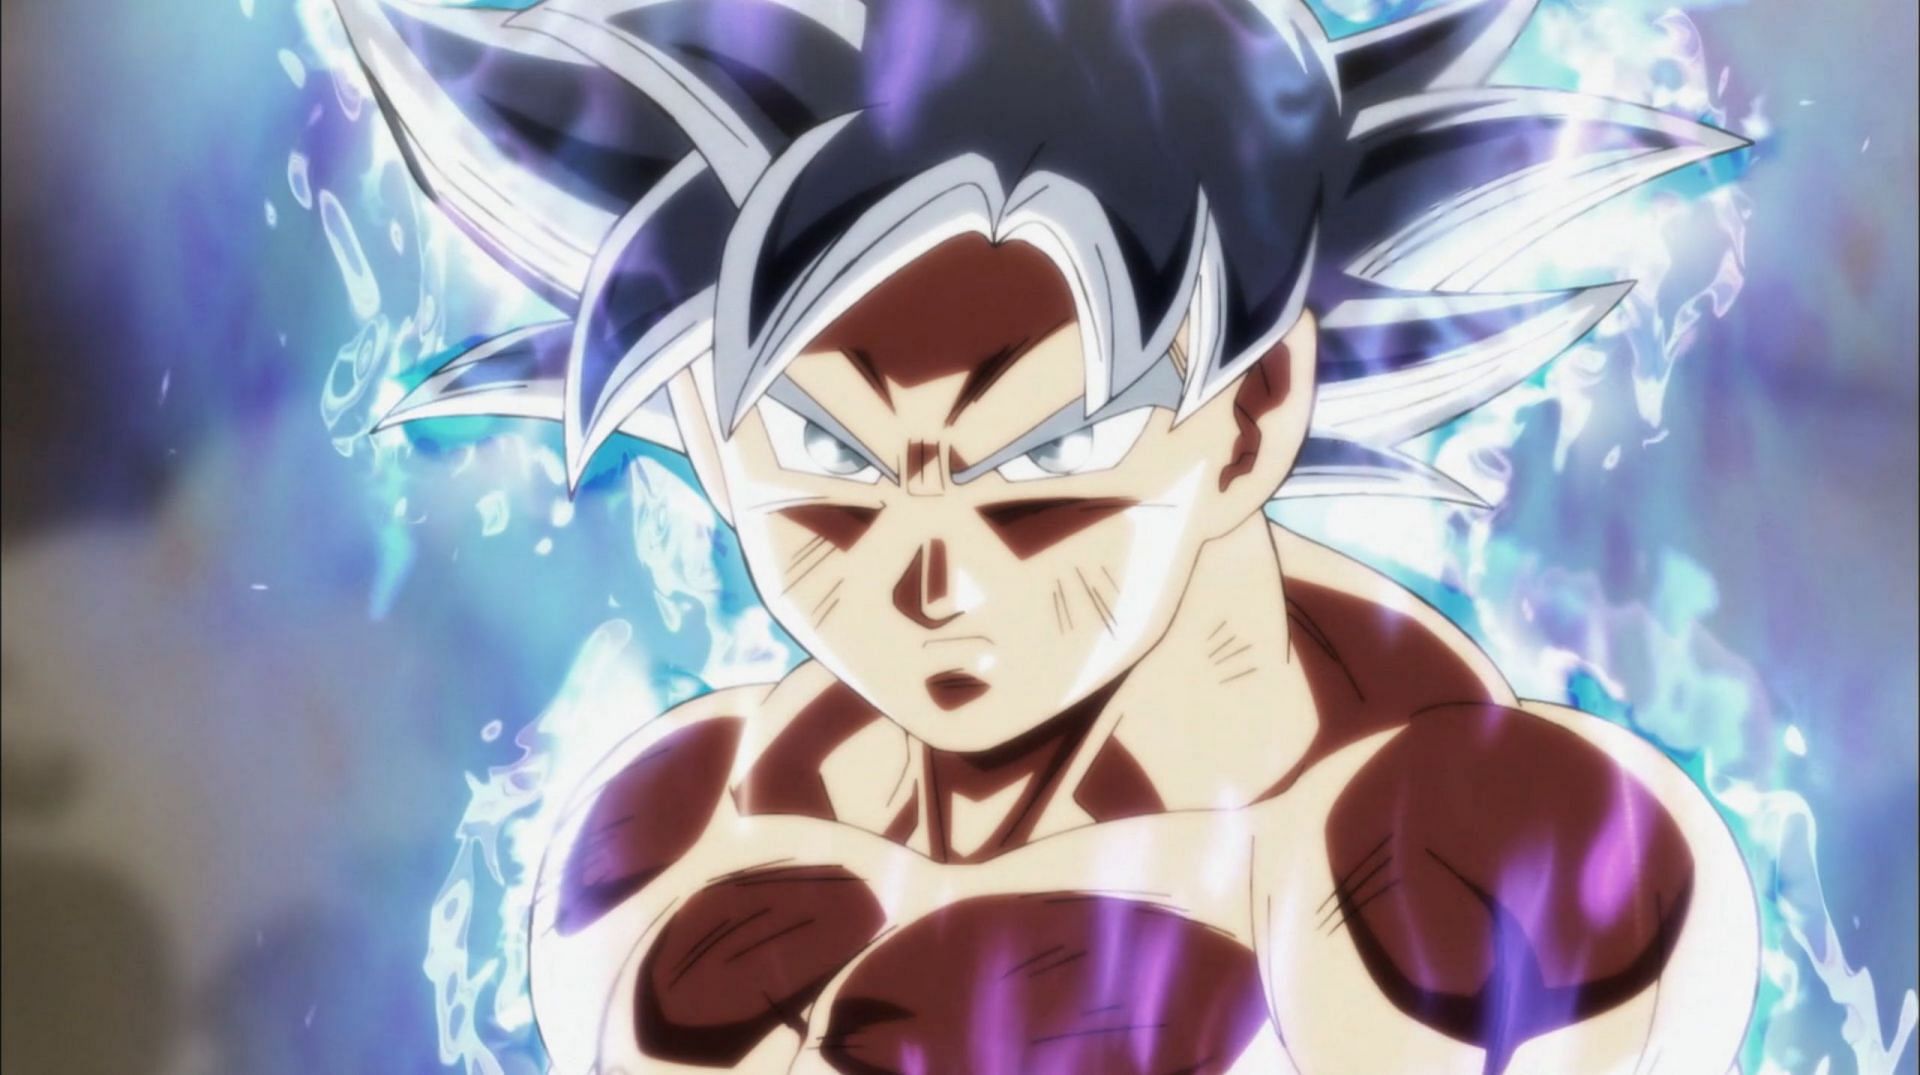 Goku in Ultra Instinct form (Image via Toei Animation)